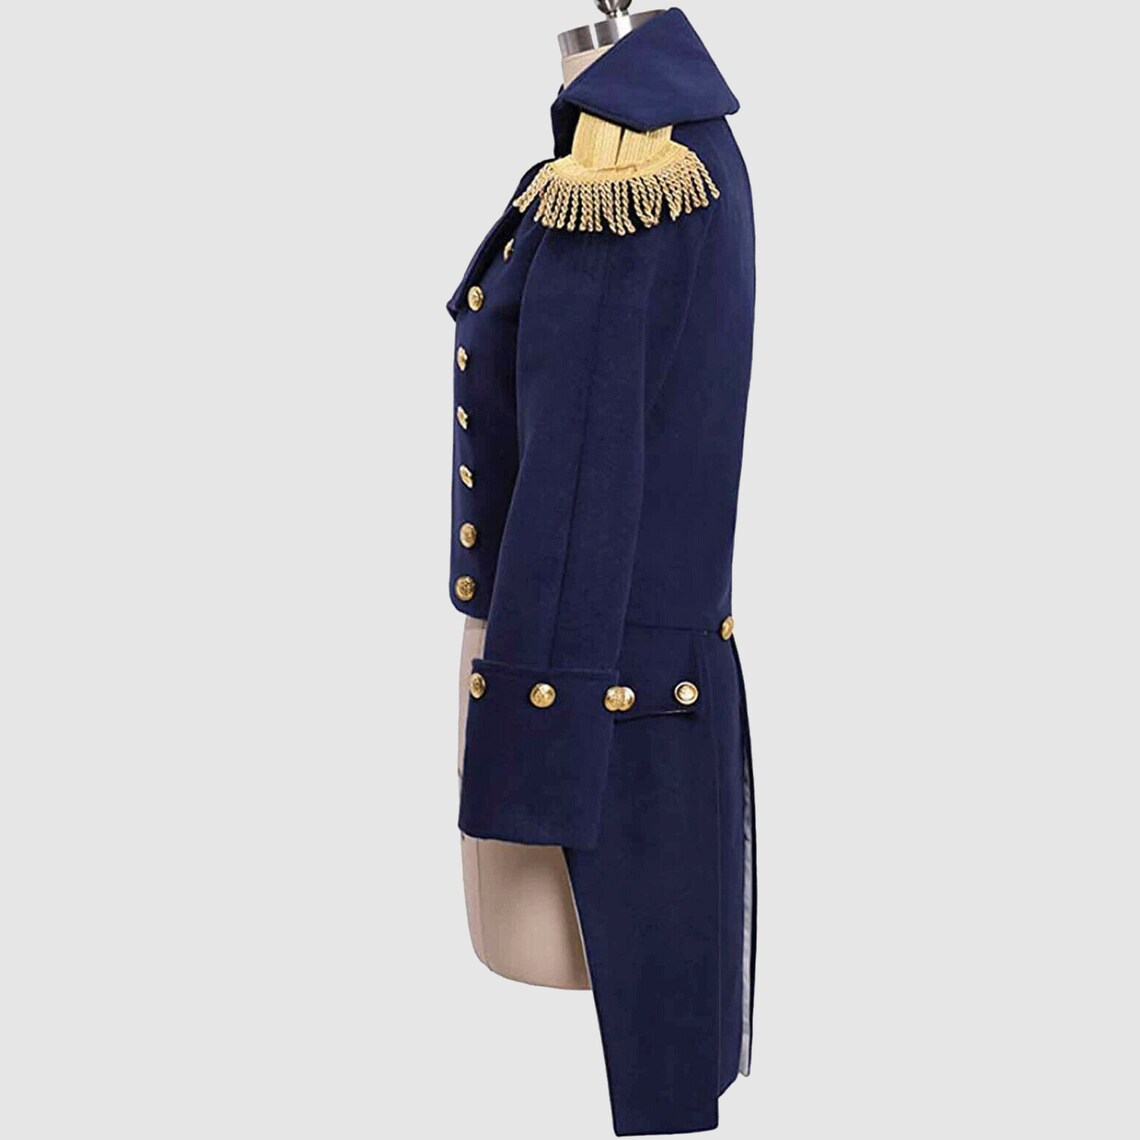 Mens Navy Blue Colonial Military Uniform Jacket Regency - Etsy